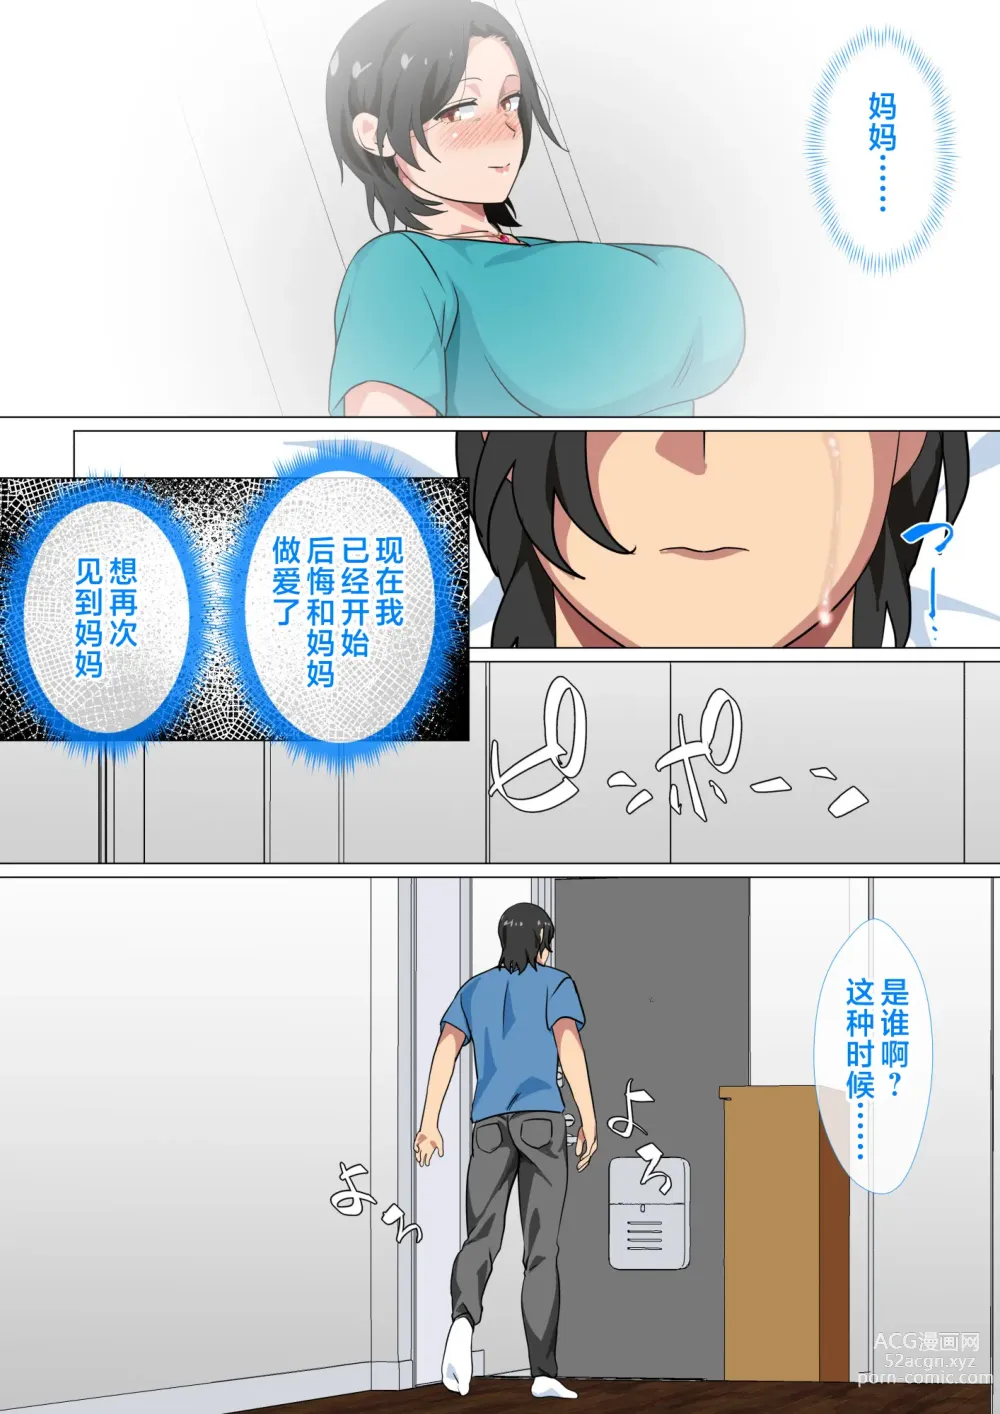 Page 6 of doujinshi 向母亲告白之后获得了仅有一天做爱的机会2